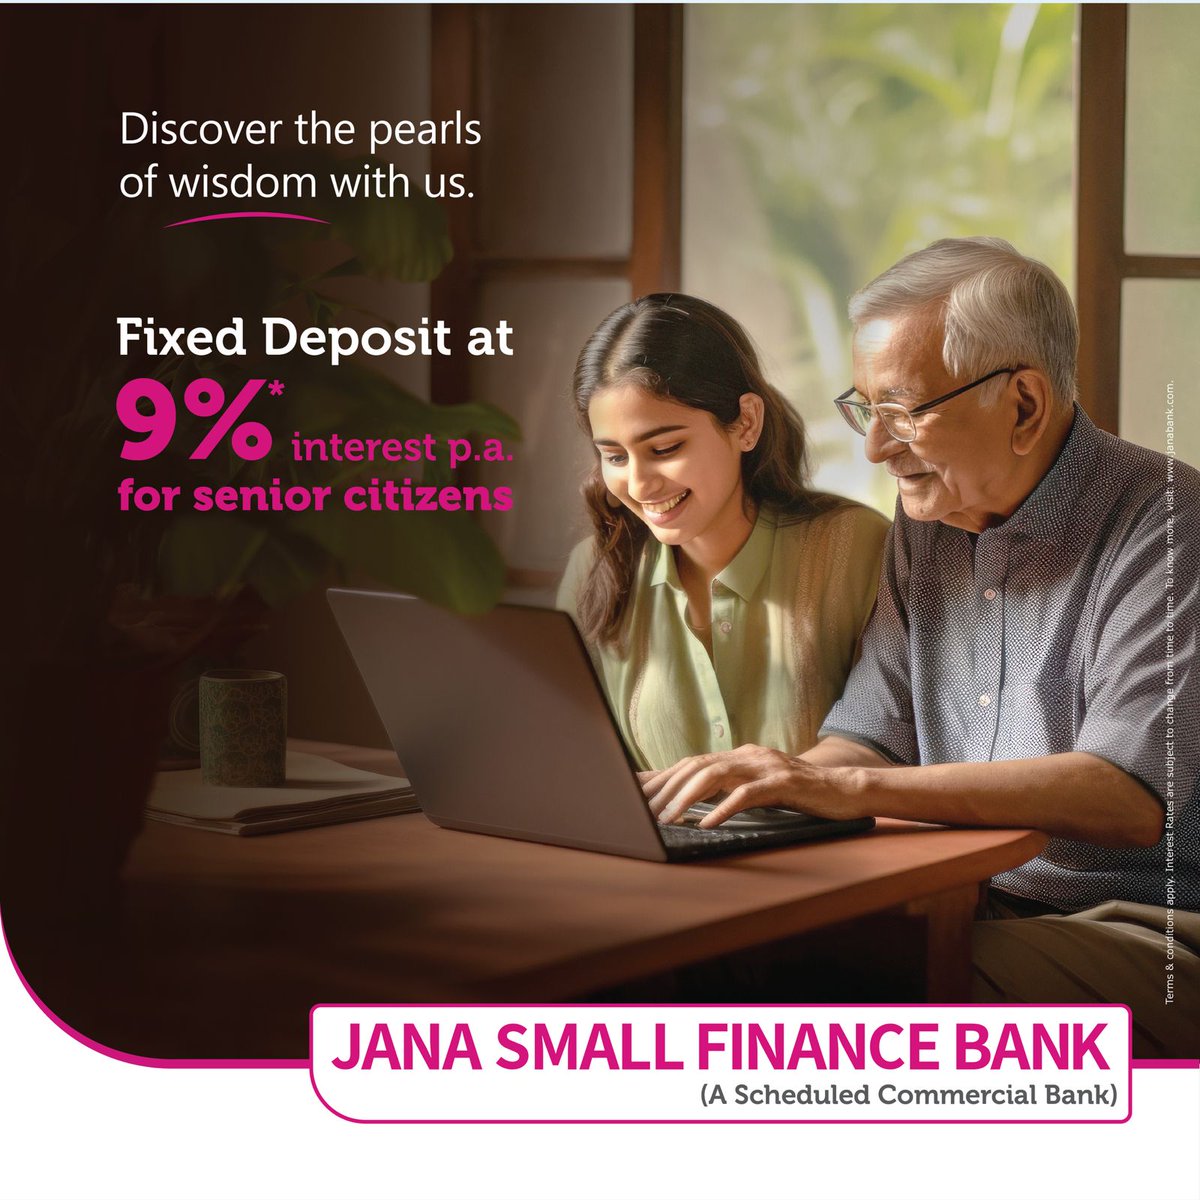 Save the best way with #JanaSmallFinanceBank. Say hello to our fixed deposit for senior citizens.
#janabank #savings #FixedDeposit